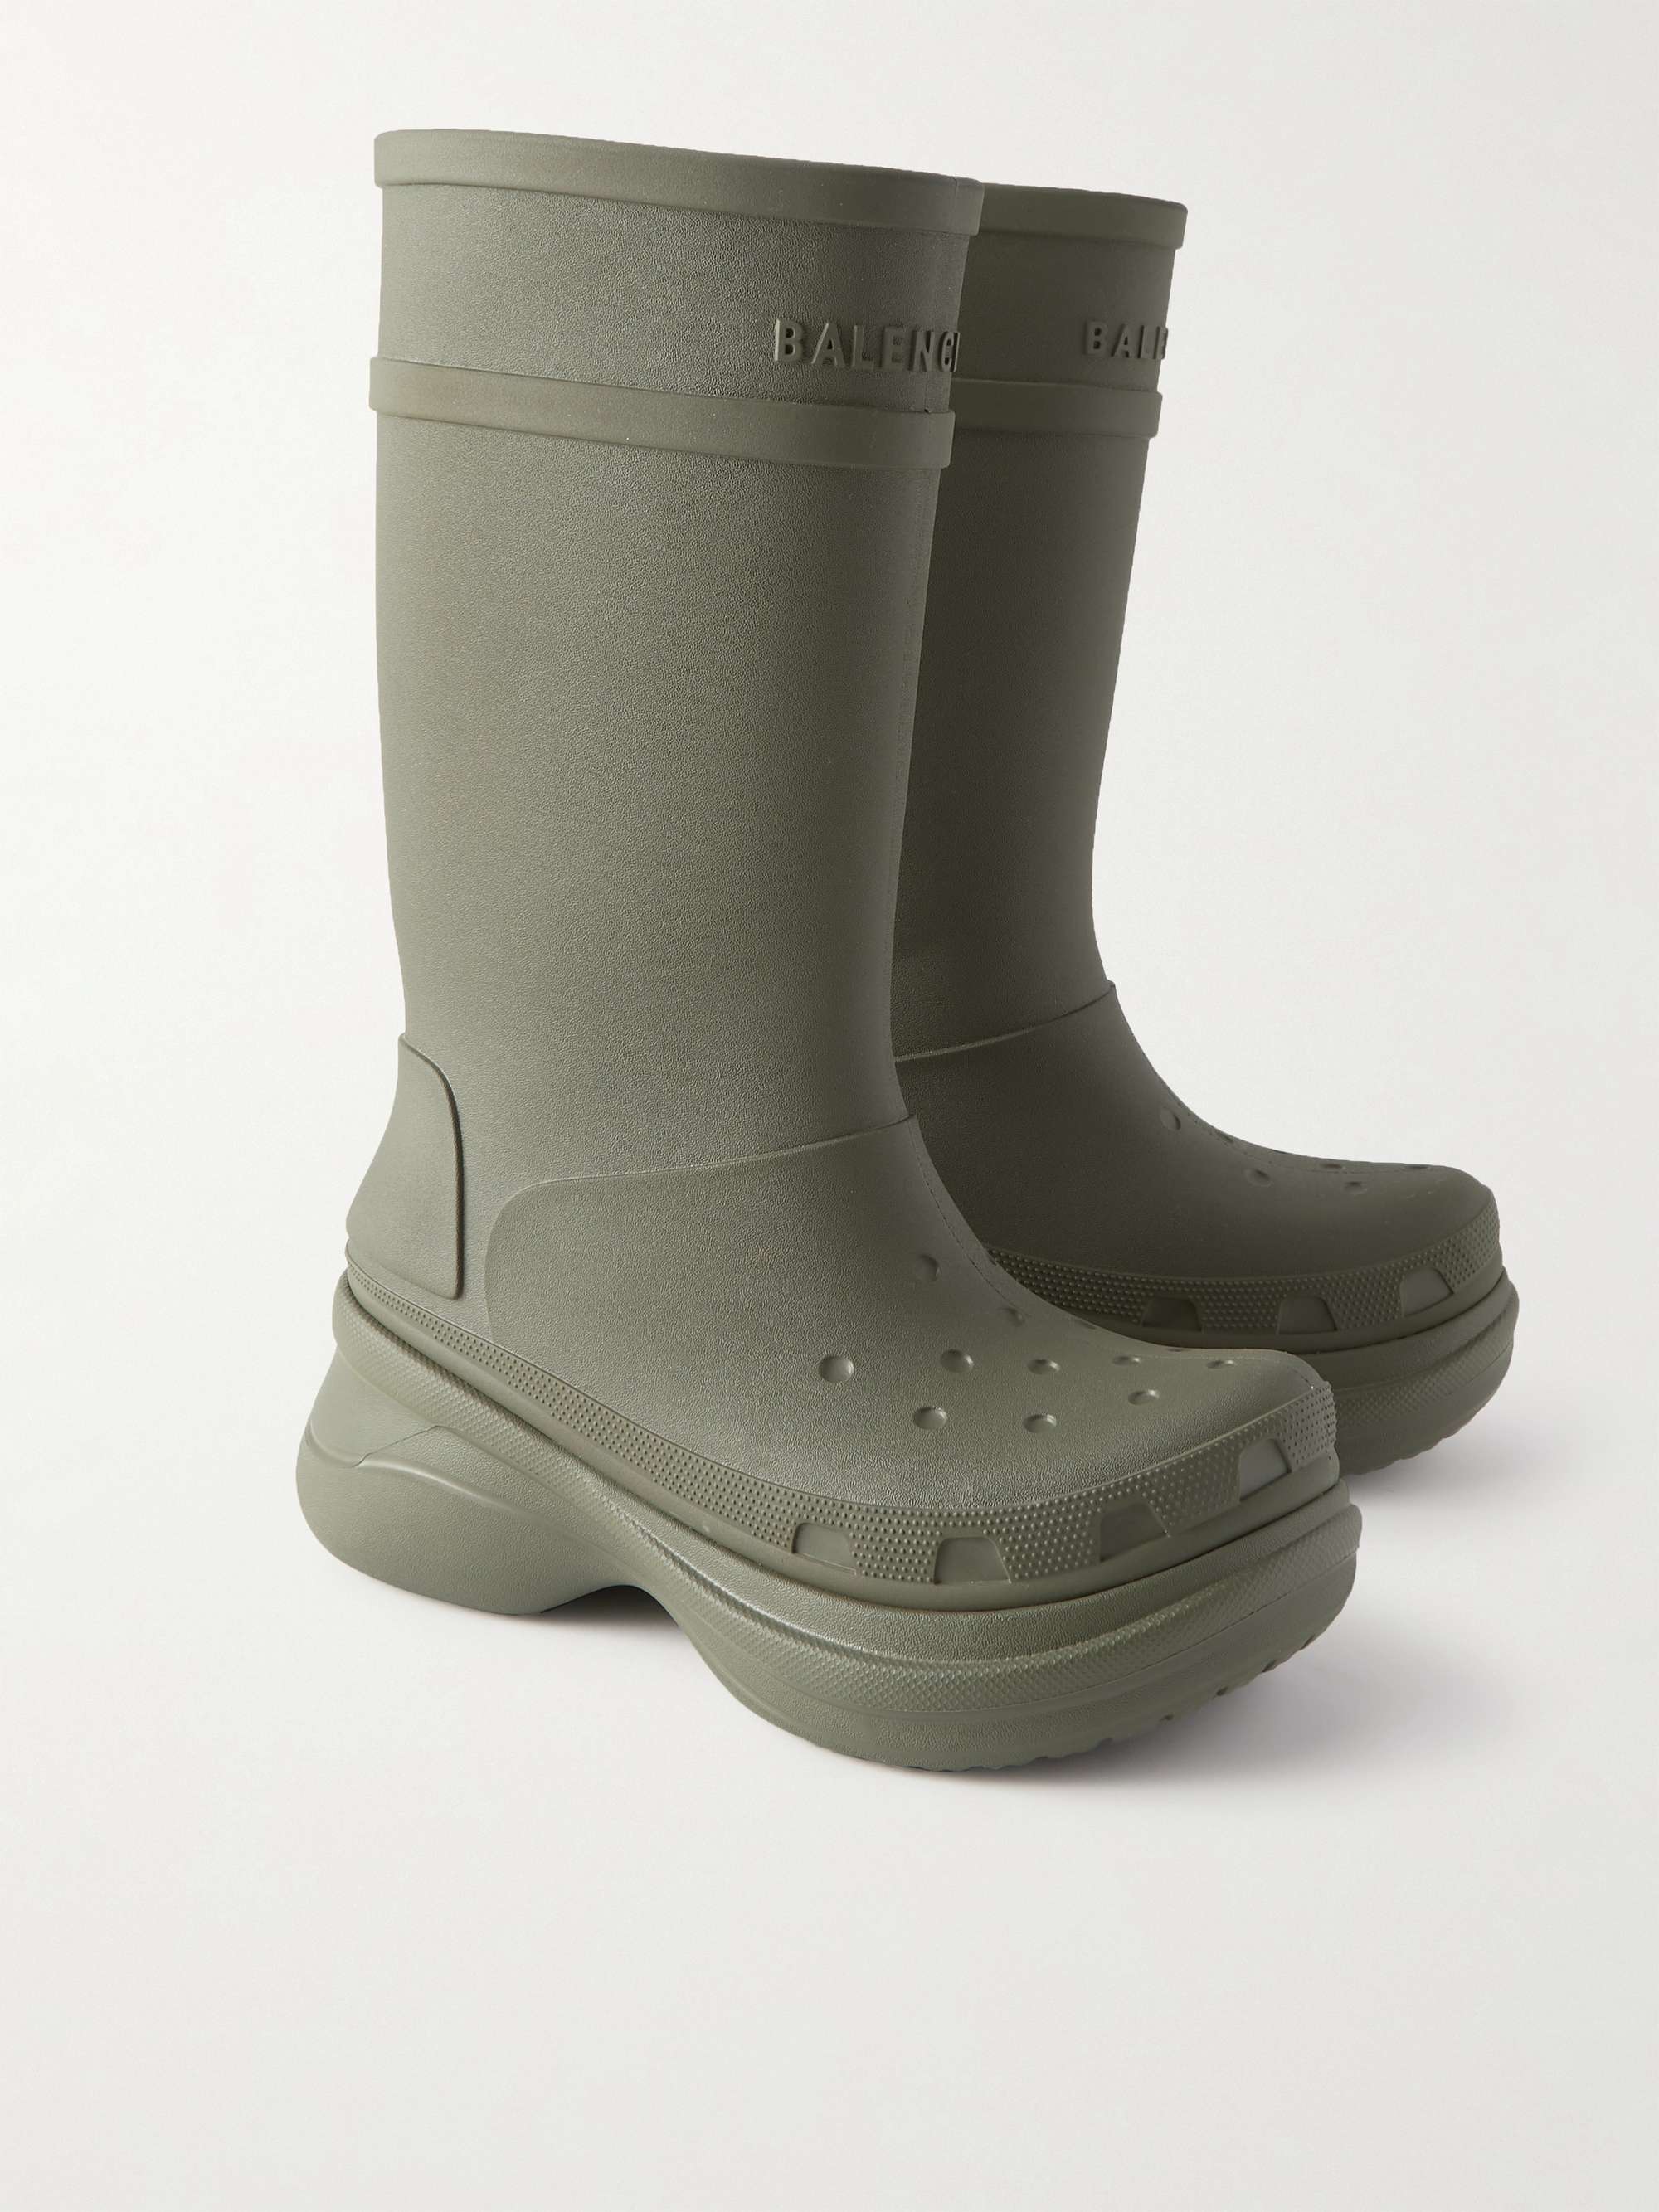 BALENCIAGA + Crocs Rubber Boots